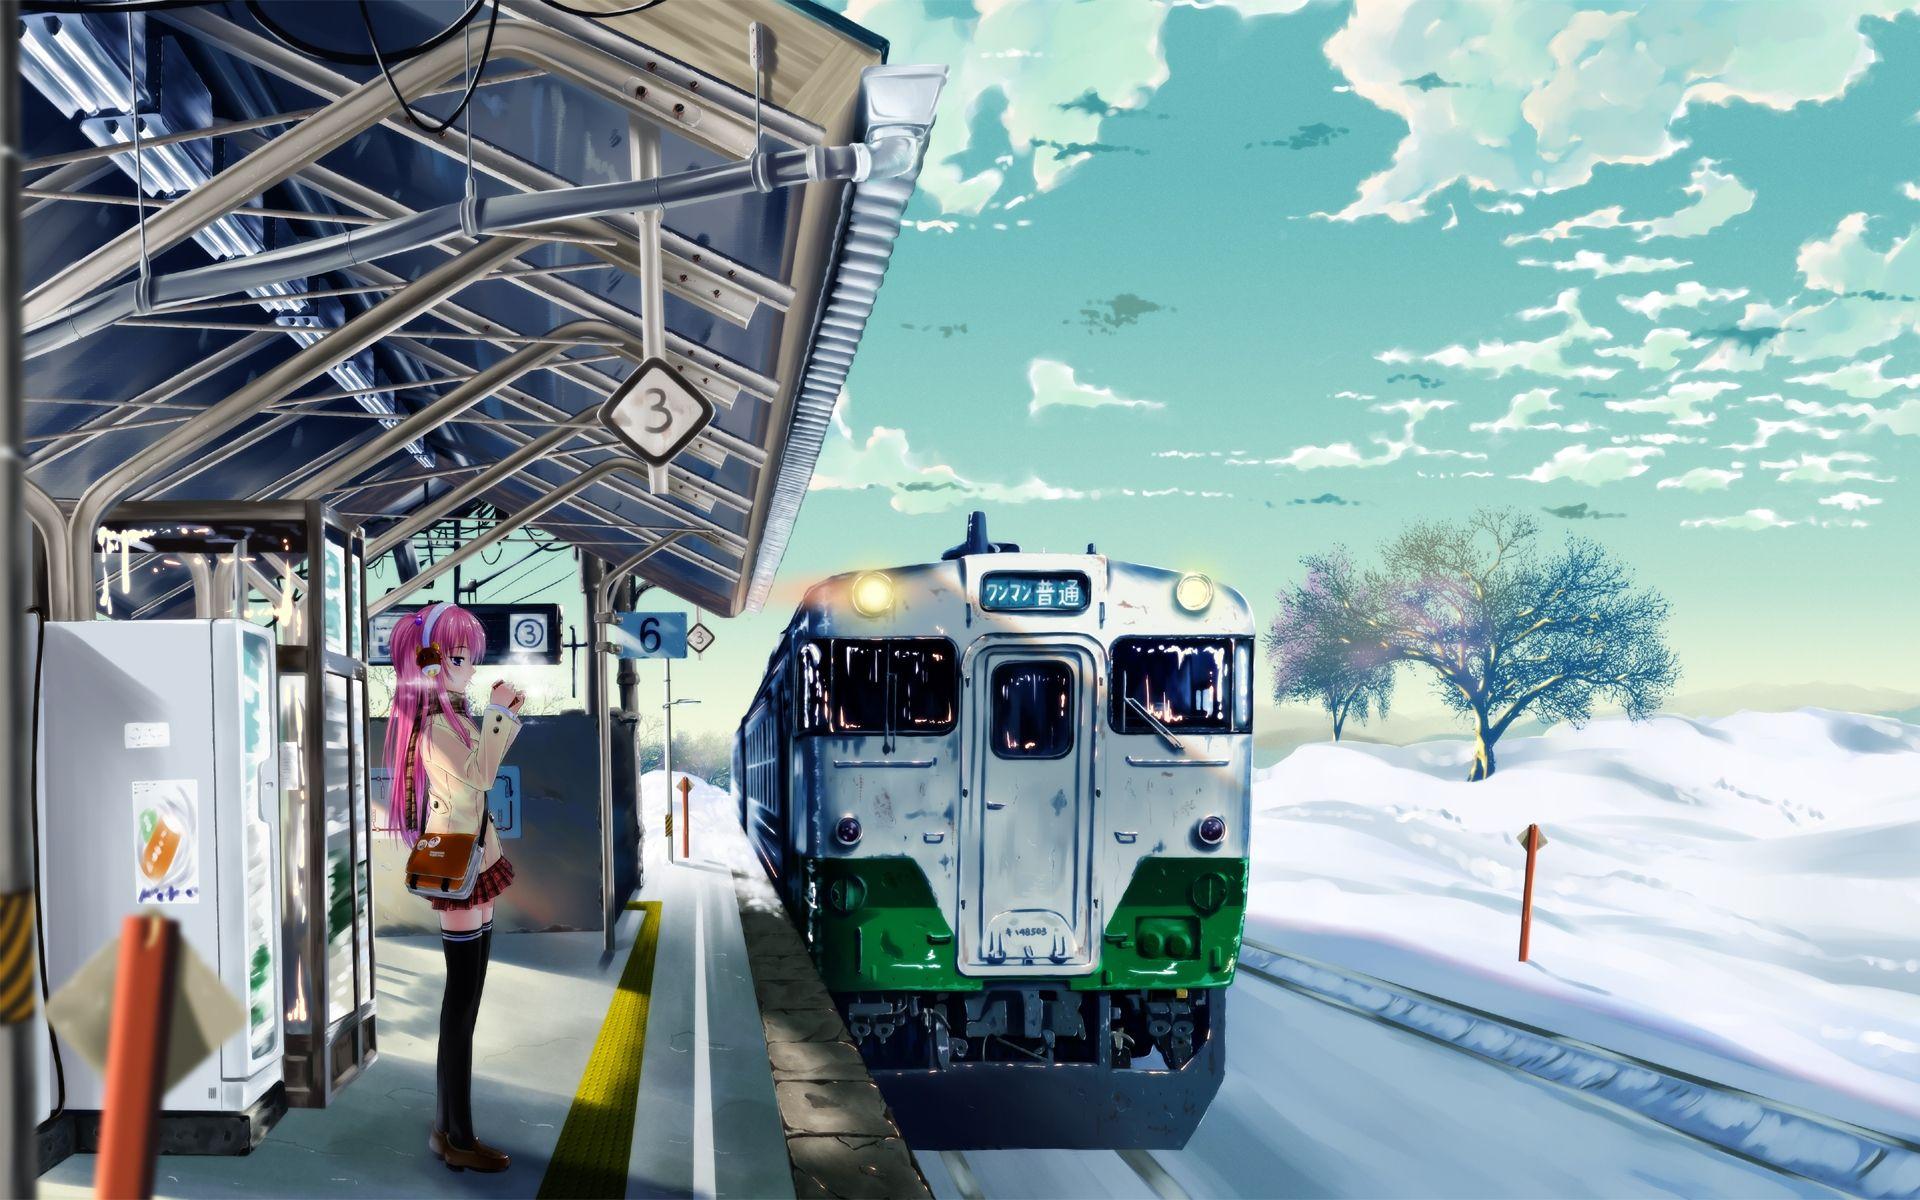 Japan, snow, trains, train stations, anime girls wallpaper